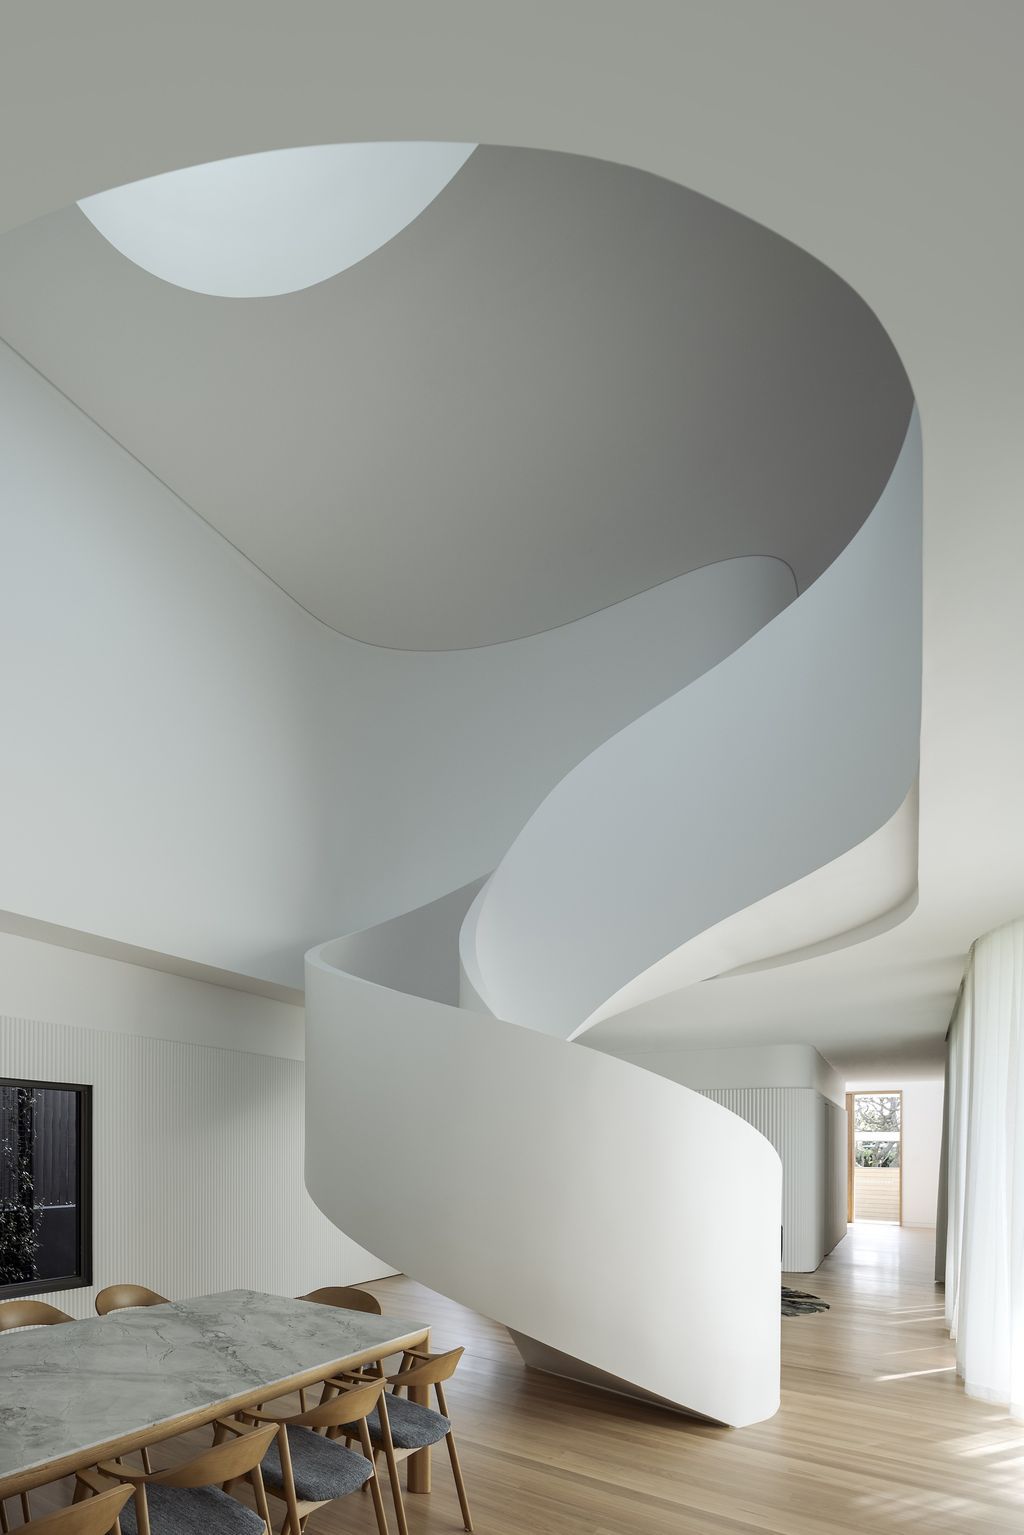 Boomerang House with Subtle, Captivating Design by Joe Adsett Architects